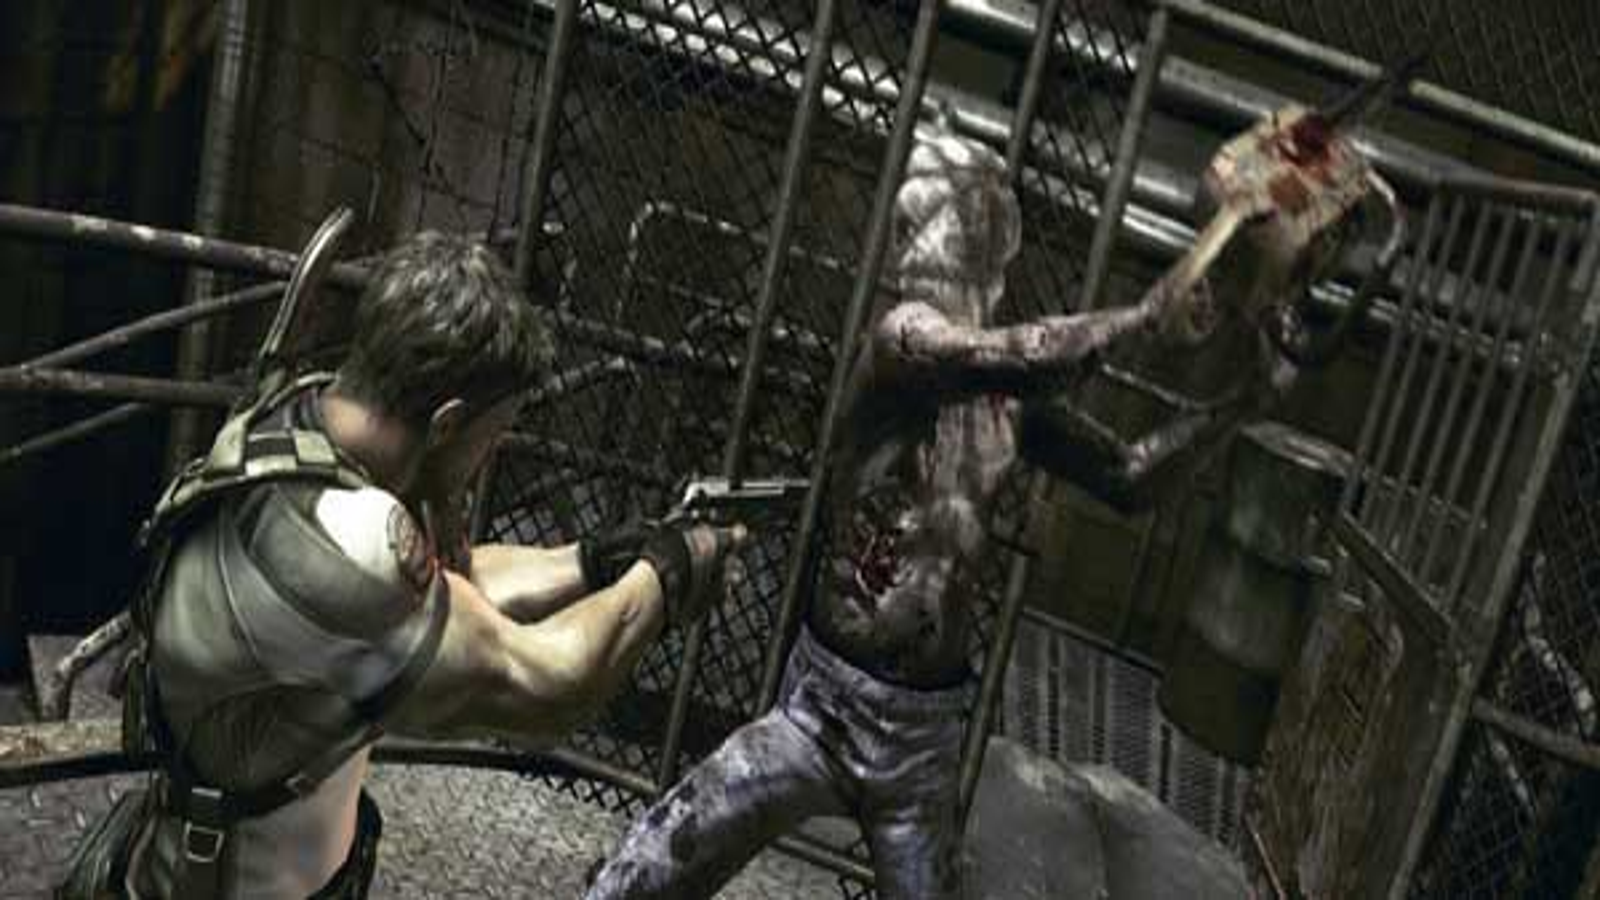  Resident Evil 5 - Xbox 360 : Capcom U S a Inc: Video Games